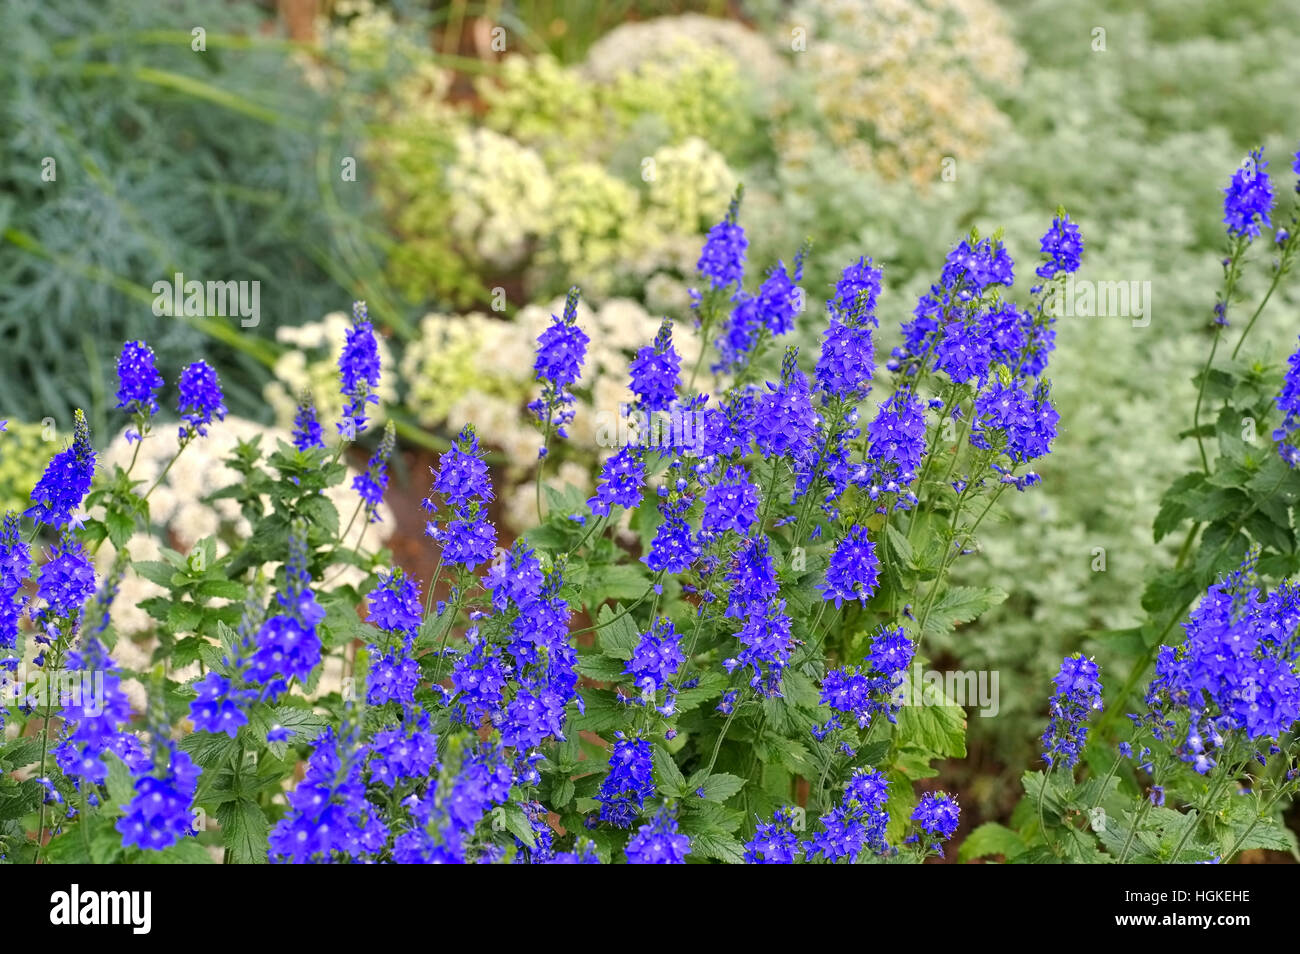 Ehrenpreis, Veronica crinita - Gypsyweed, Veronica crinita, a blue summer flower Stock Photo